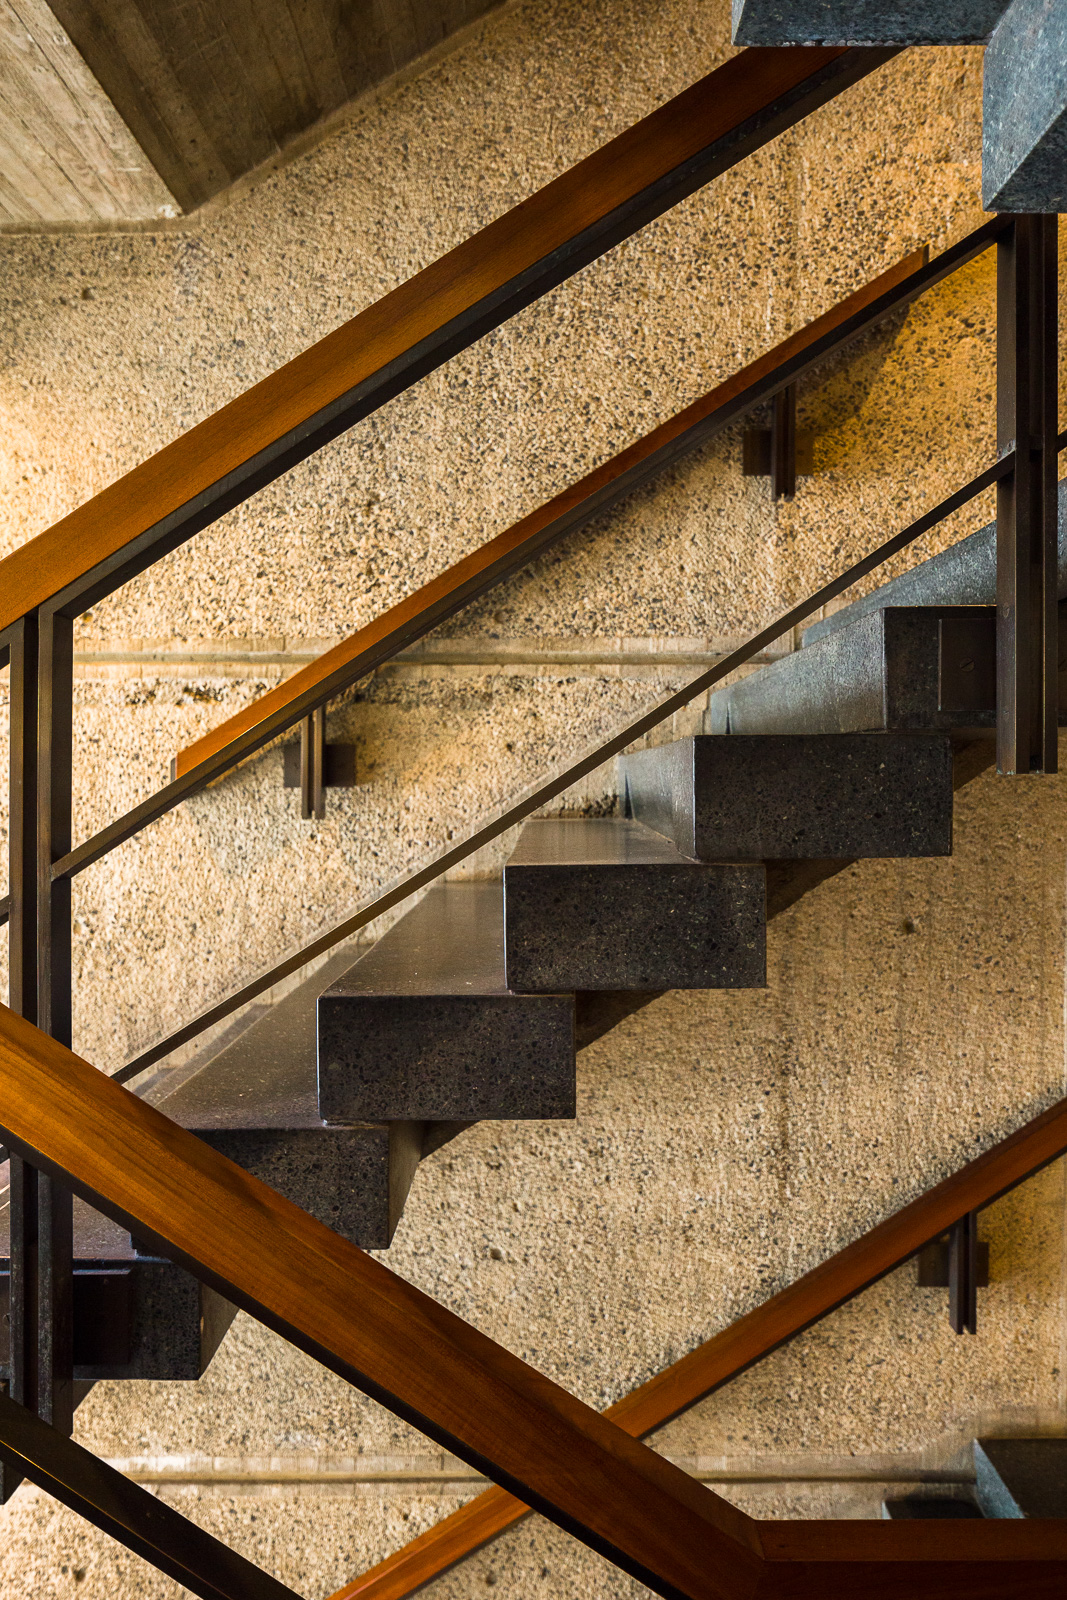 Stair at Met Breuer by Marcel Breuer. Photo by Jason R. Woods